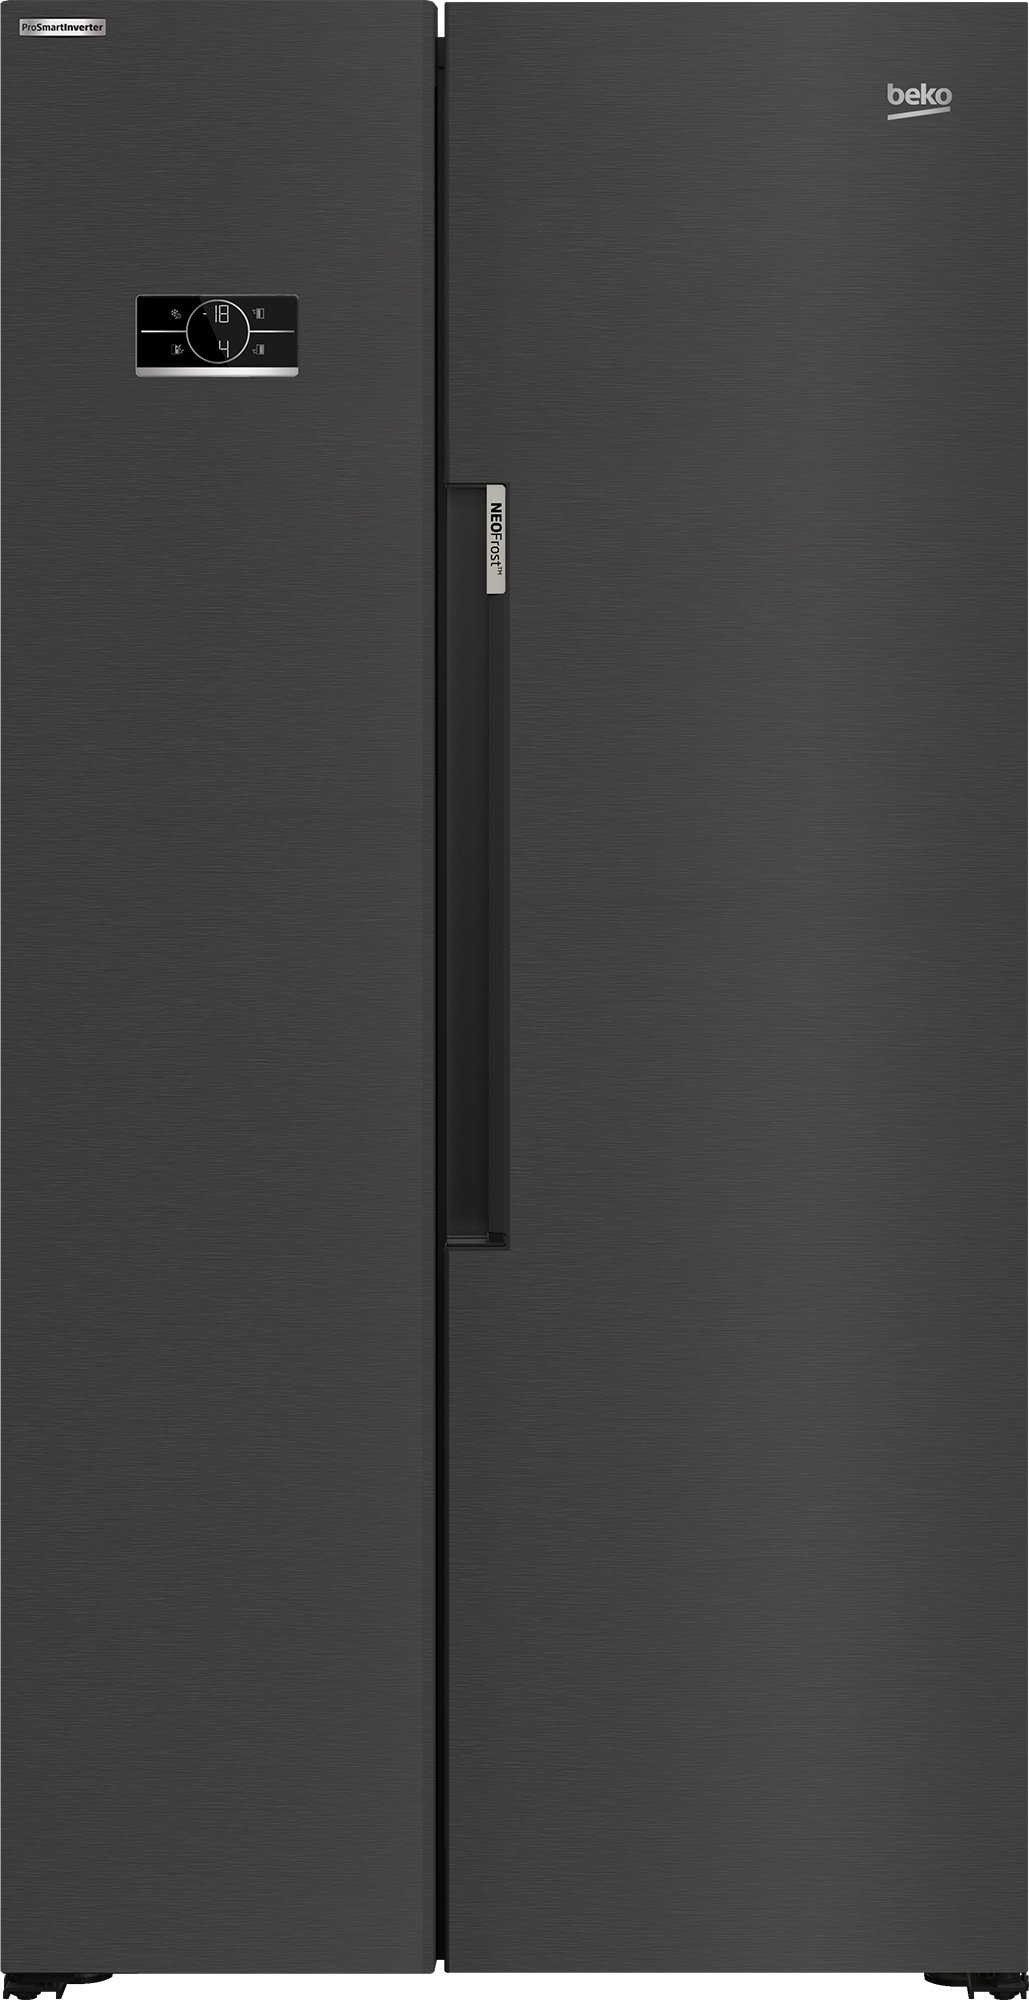 Beko Freestanding American Style Fridge Freezer - Black Steel ASL1442VPZ